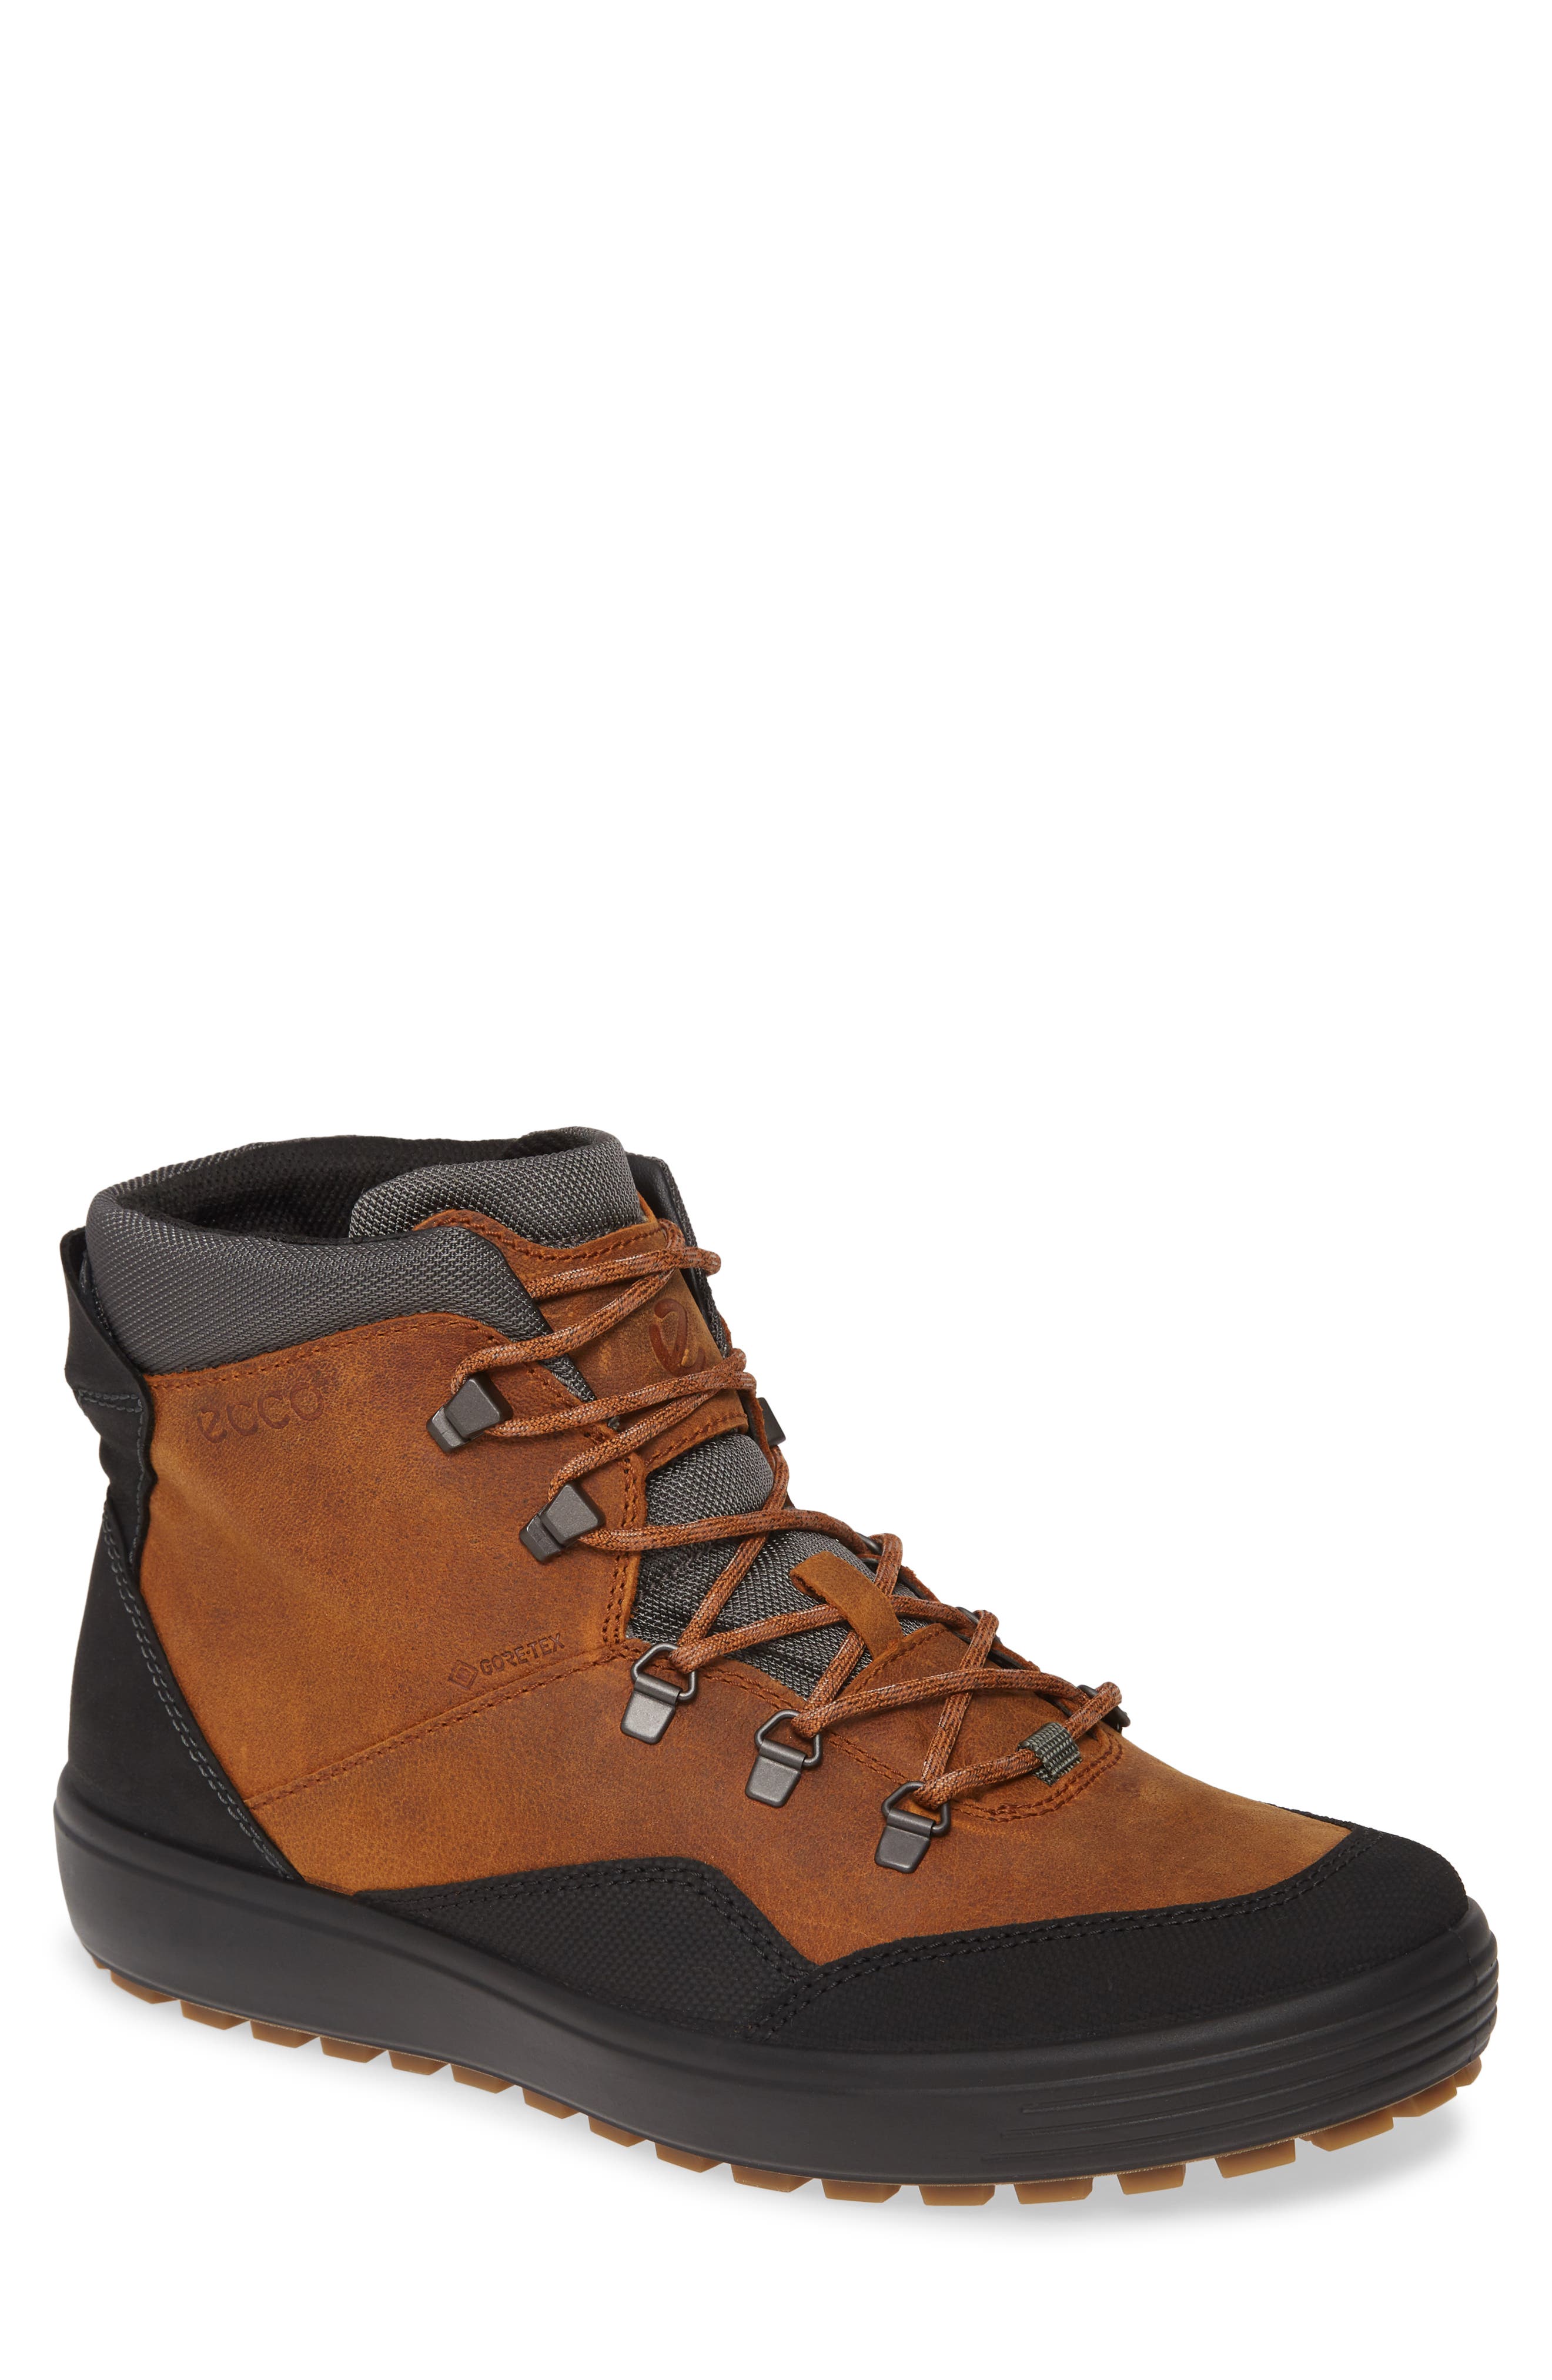 UPC 825840089882 product image for Men's Ecco Soft 7 Tred Terrain High Sneaker, Size 6-6.5US / 40EU - Brown | upcitemdb.com